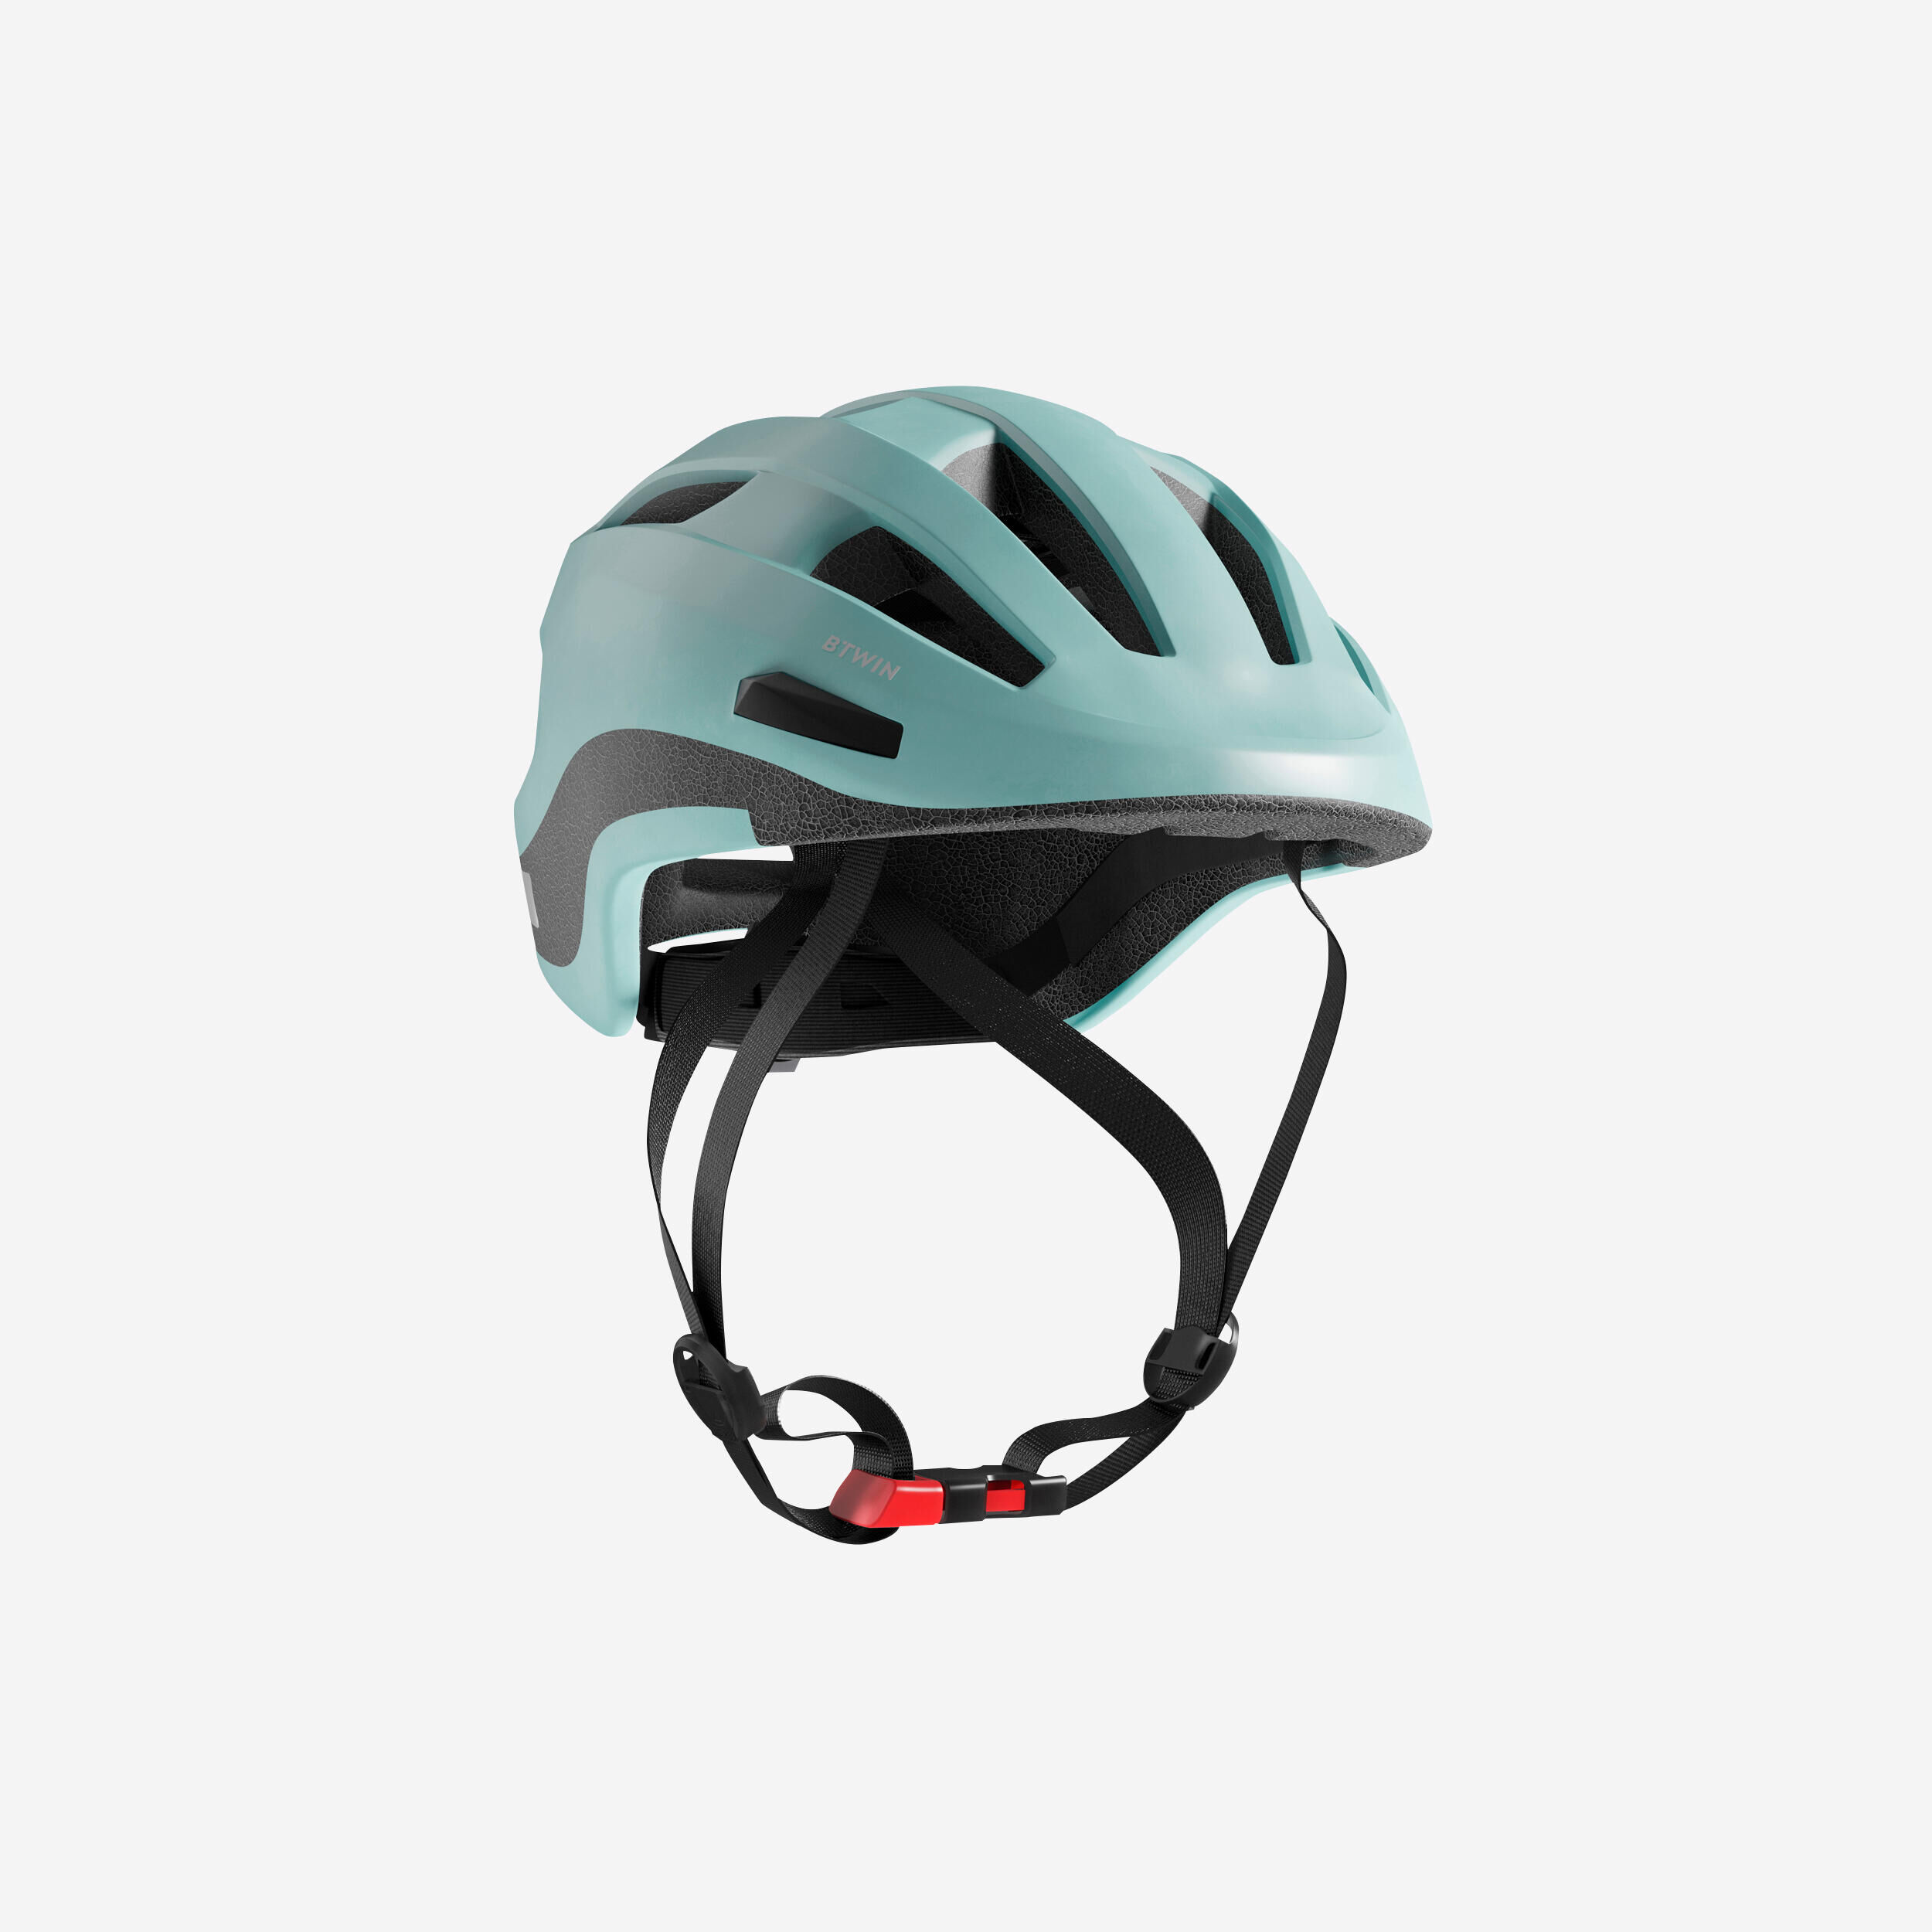 BTWIN City Cycling Helmet 500 - Green